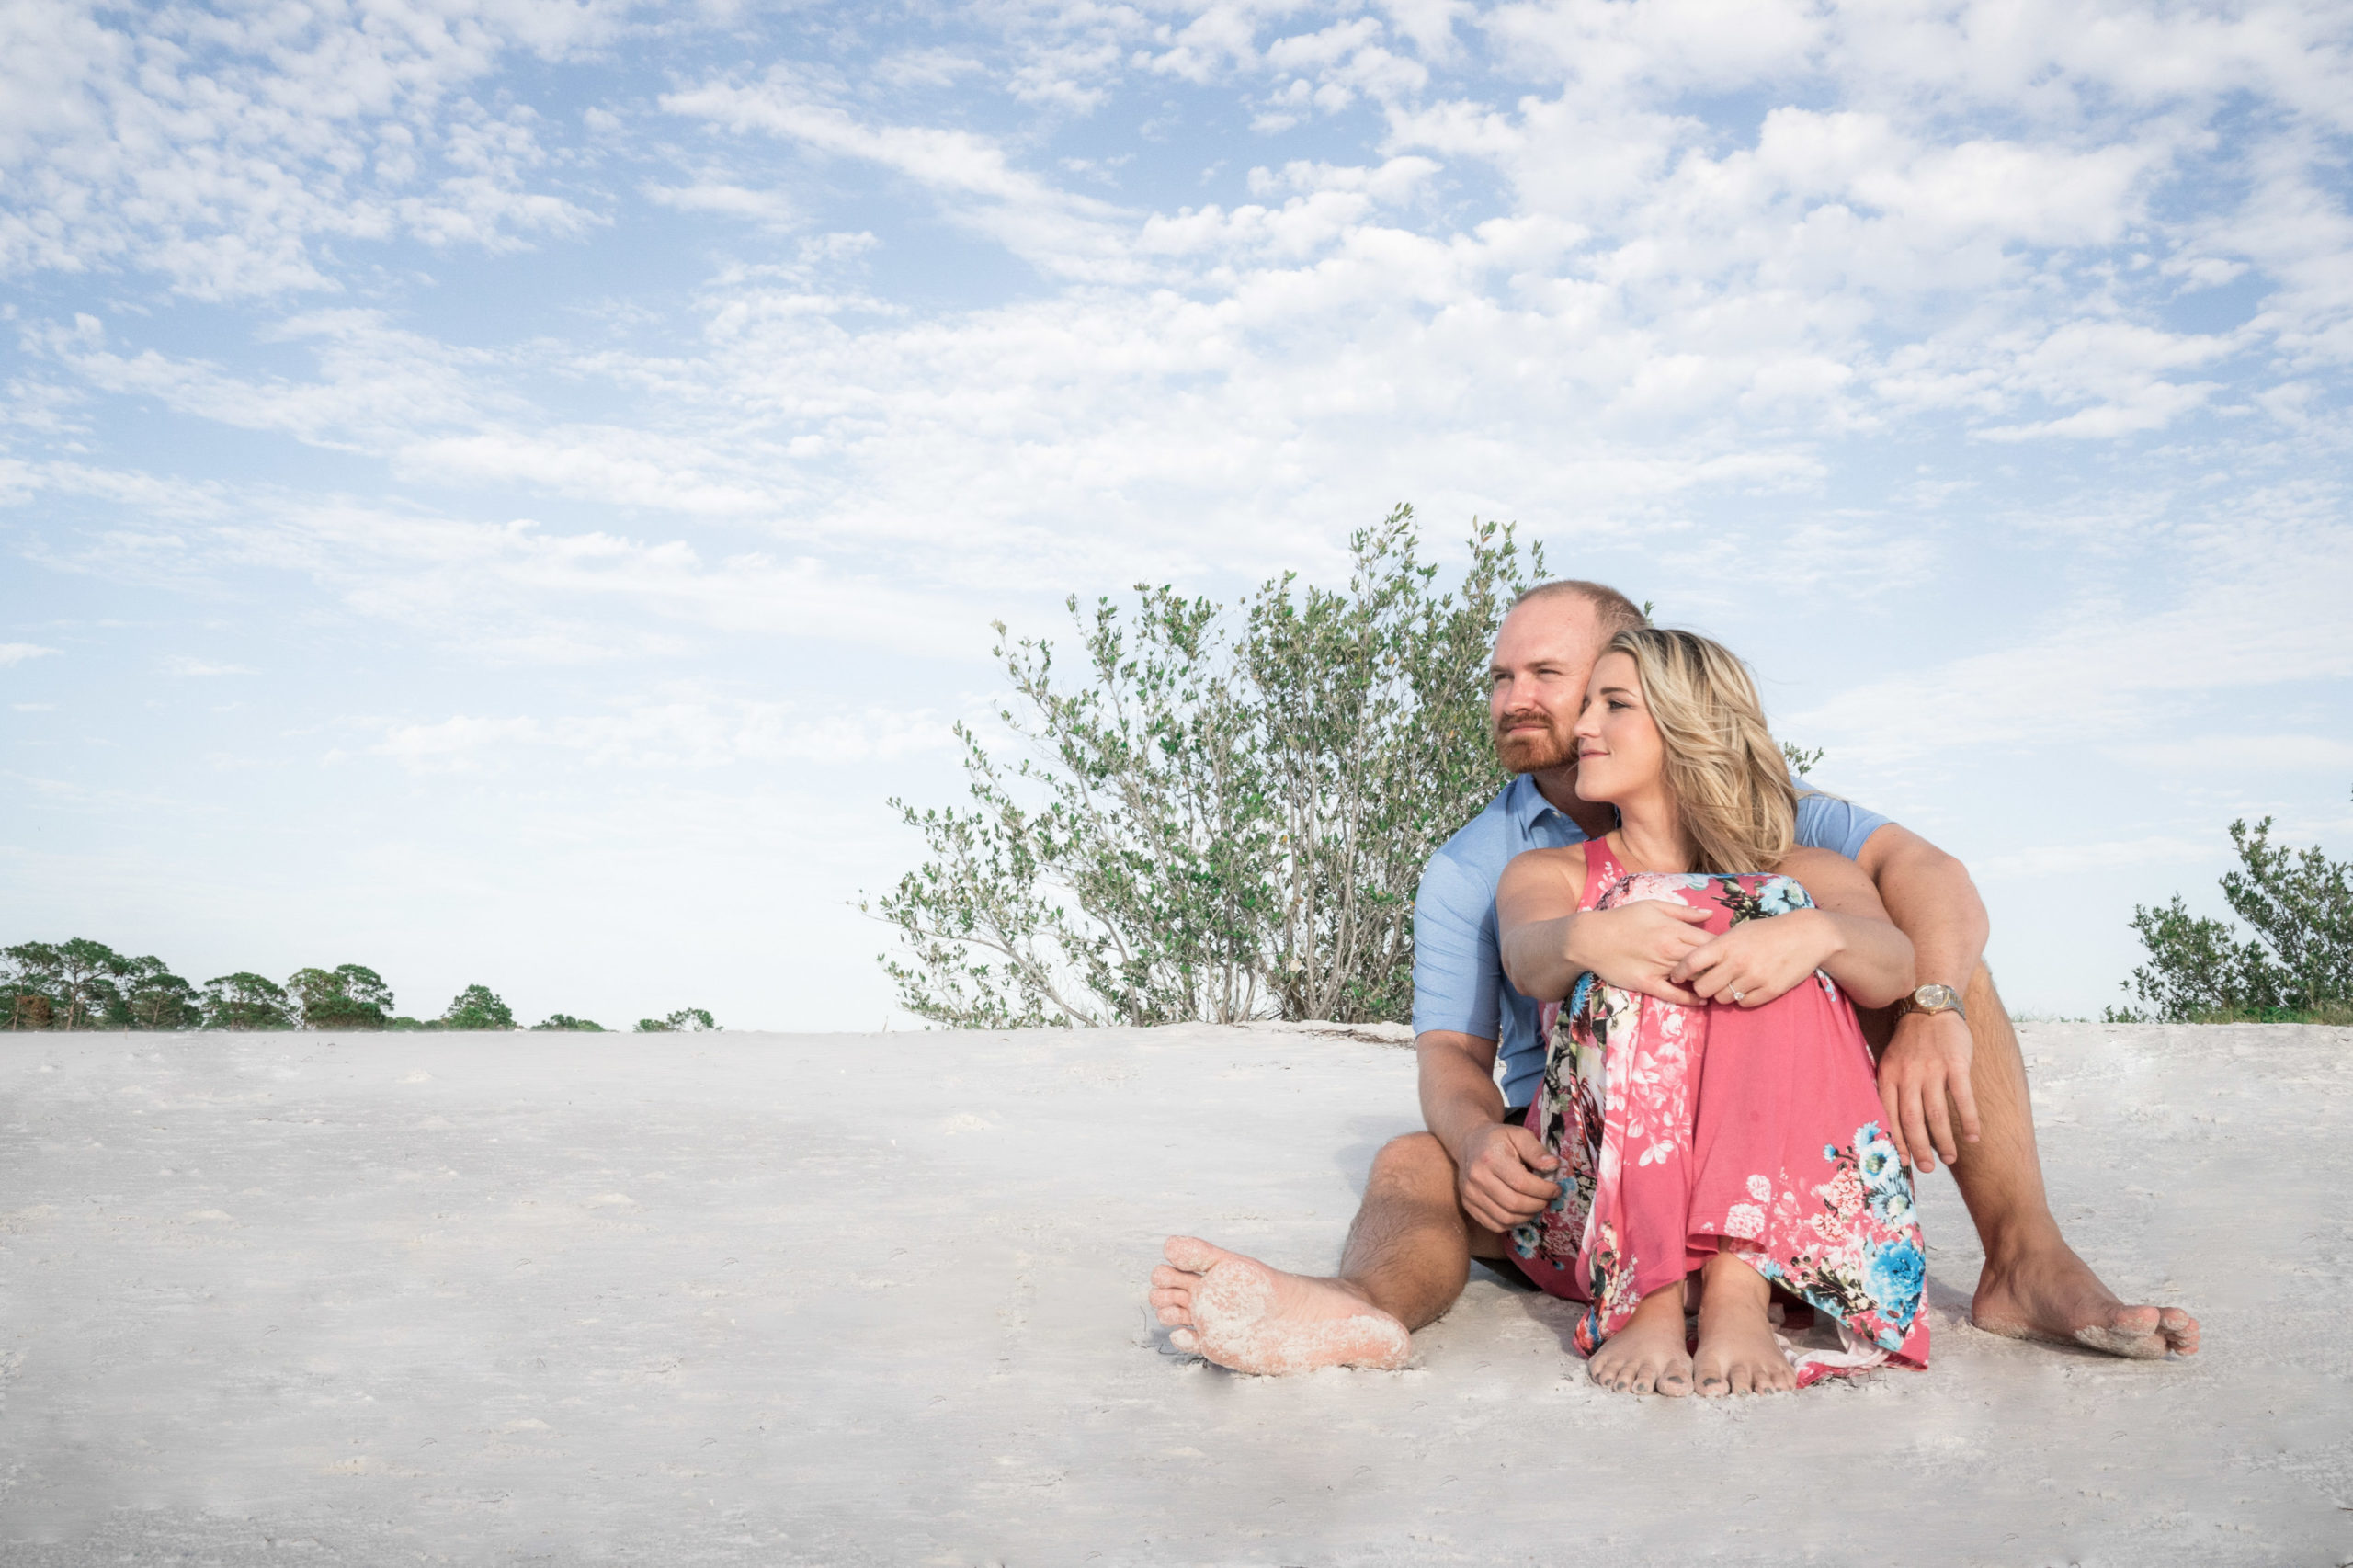 honeymoon island beach in tampa florida engagement session of couple sitting on beach cuddling